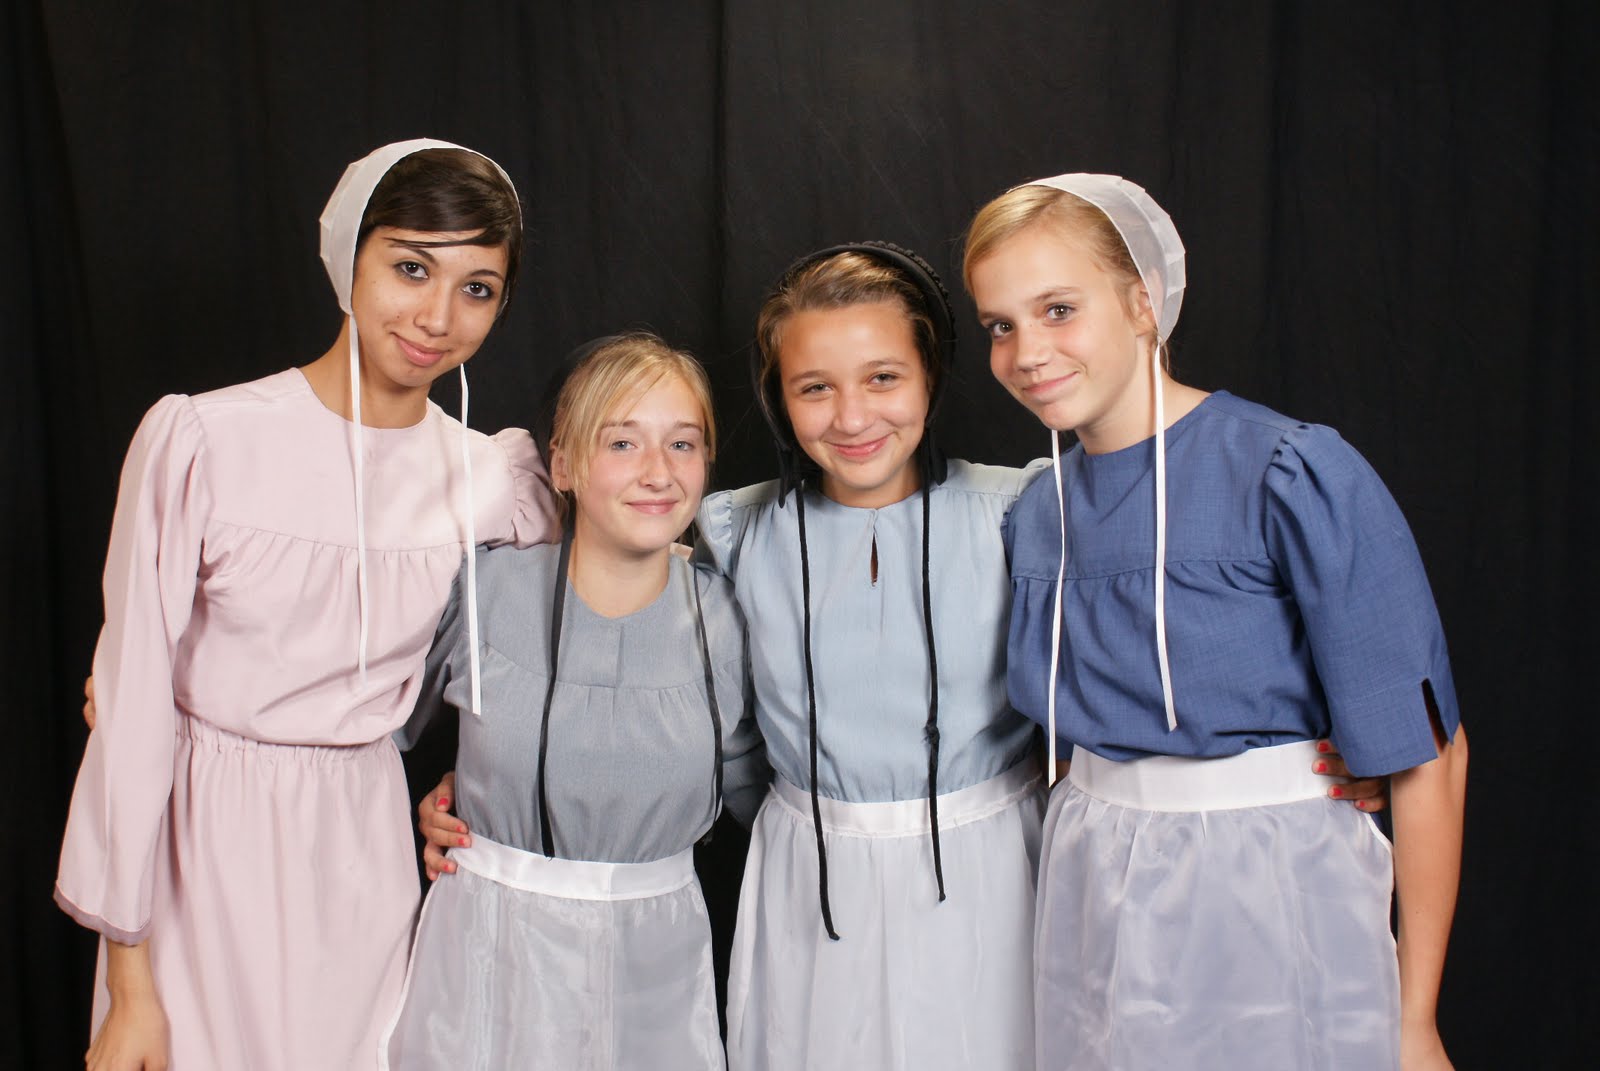 Amish Woman's Full Dress. 